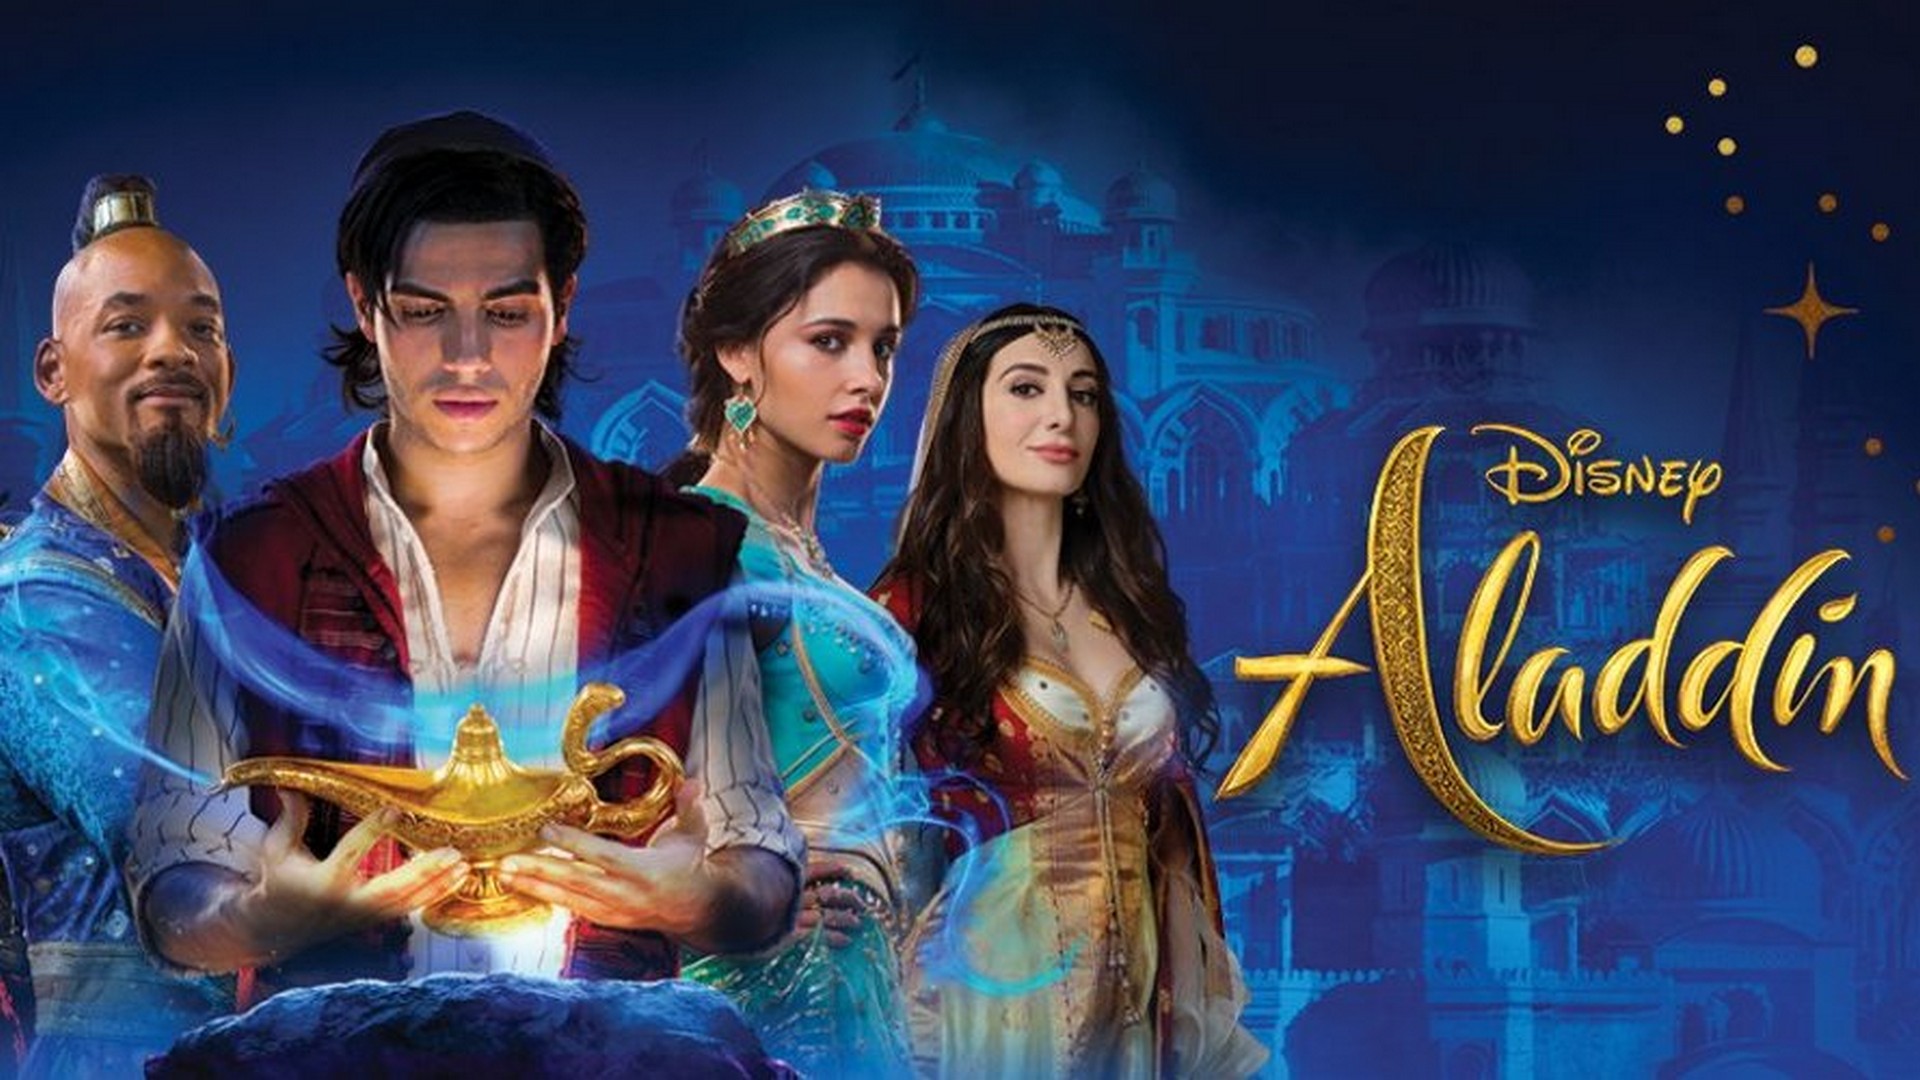 Aladdin 2019 Wallpaper Hd 2019 Movie Poster Wallpaper Hd